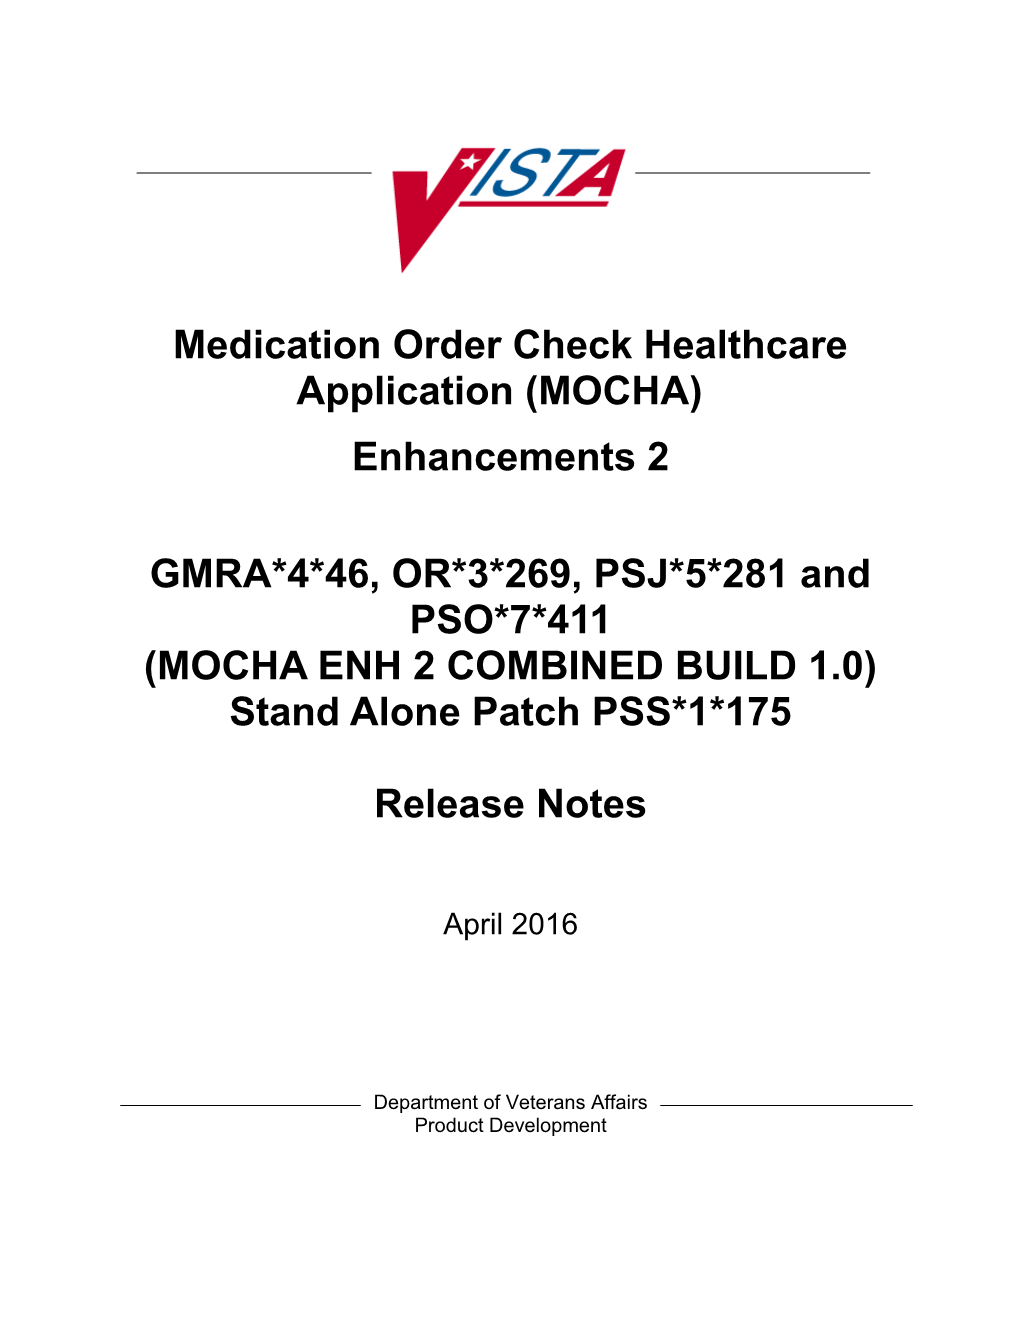 Medication Order Check Healthcare Application (MOCHA) s1